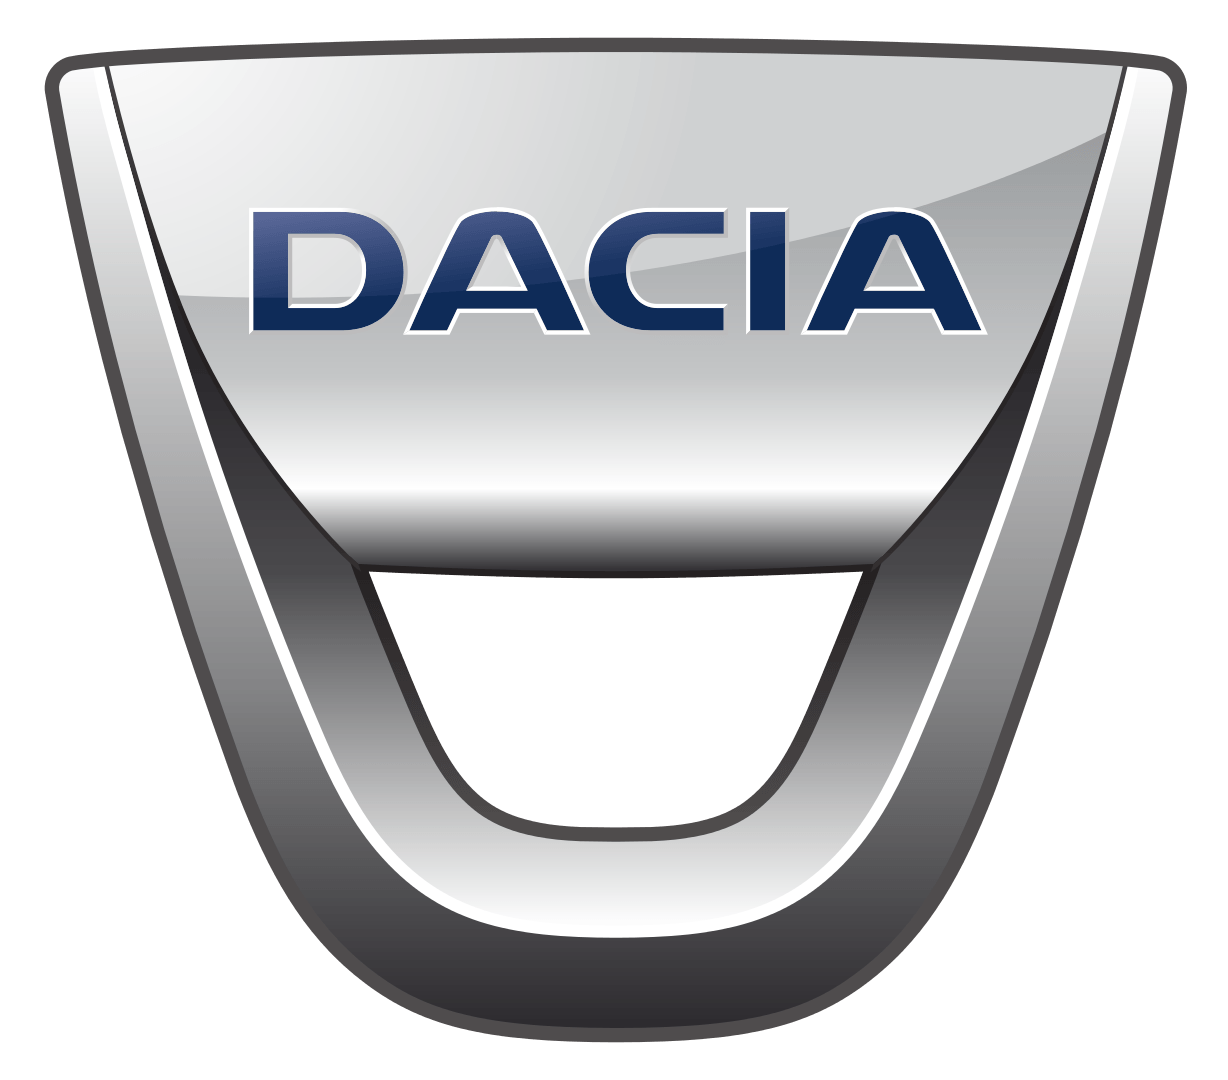 Dacia Logo - Dacia Logo Meaning and History, latest models | World Cars Brands